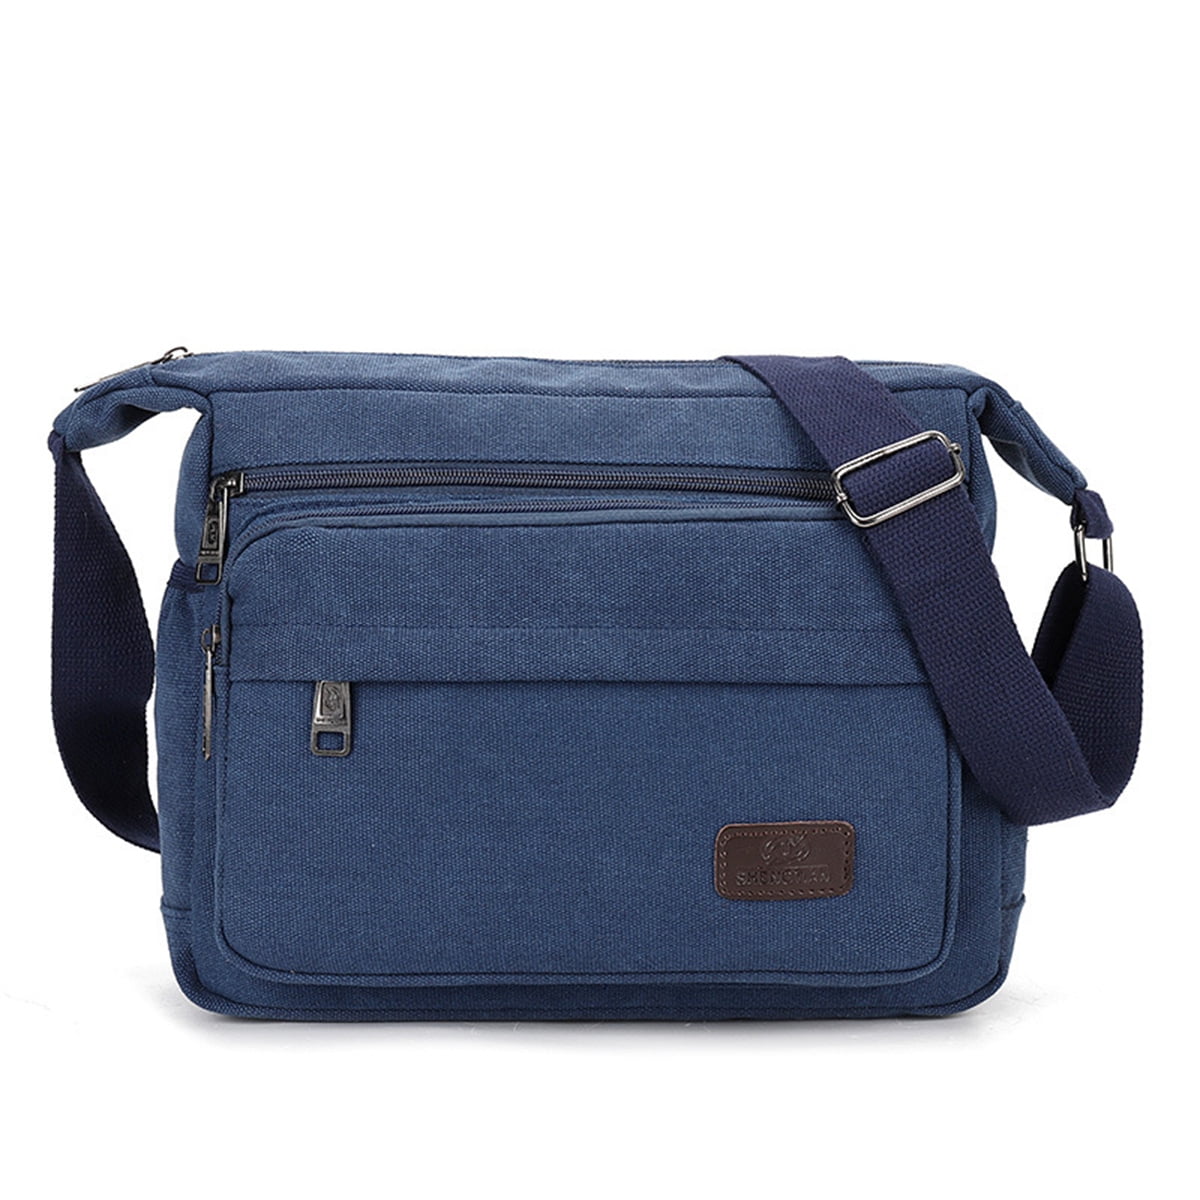 Mens Canvas Messenger Shoulder Bag Crossbody Bag for Men-Blue - Walmart.com